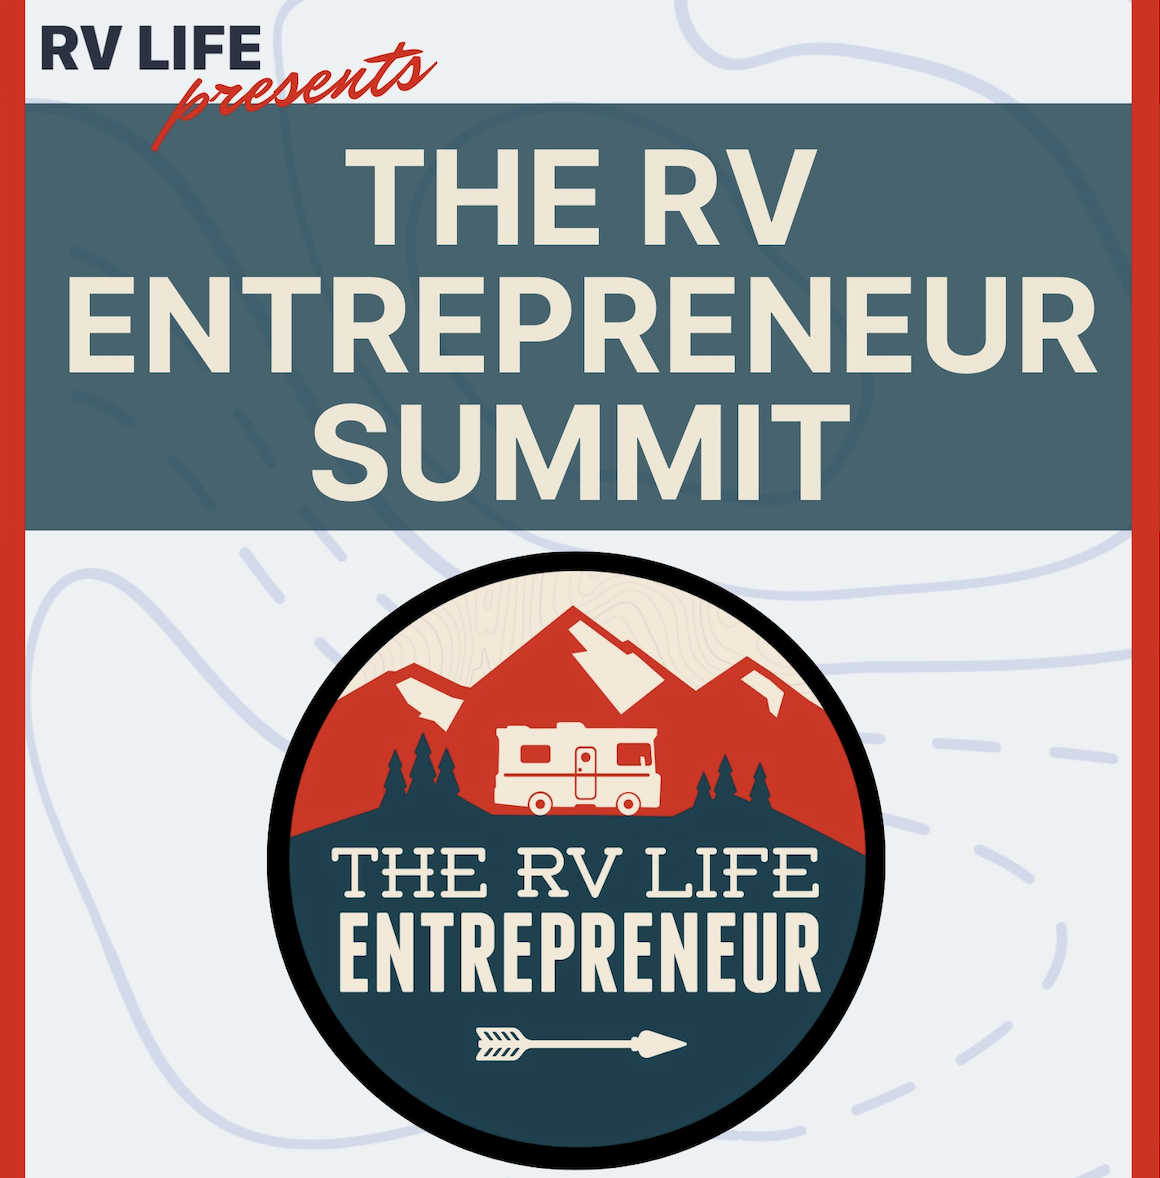 The RV Entrepreneur Summit presented by RV LIFE